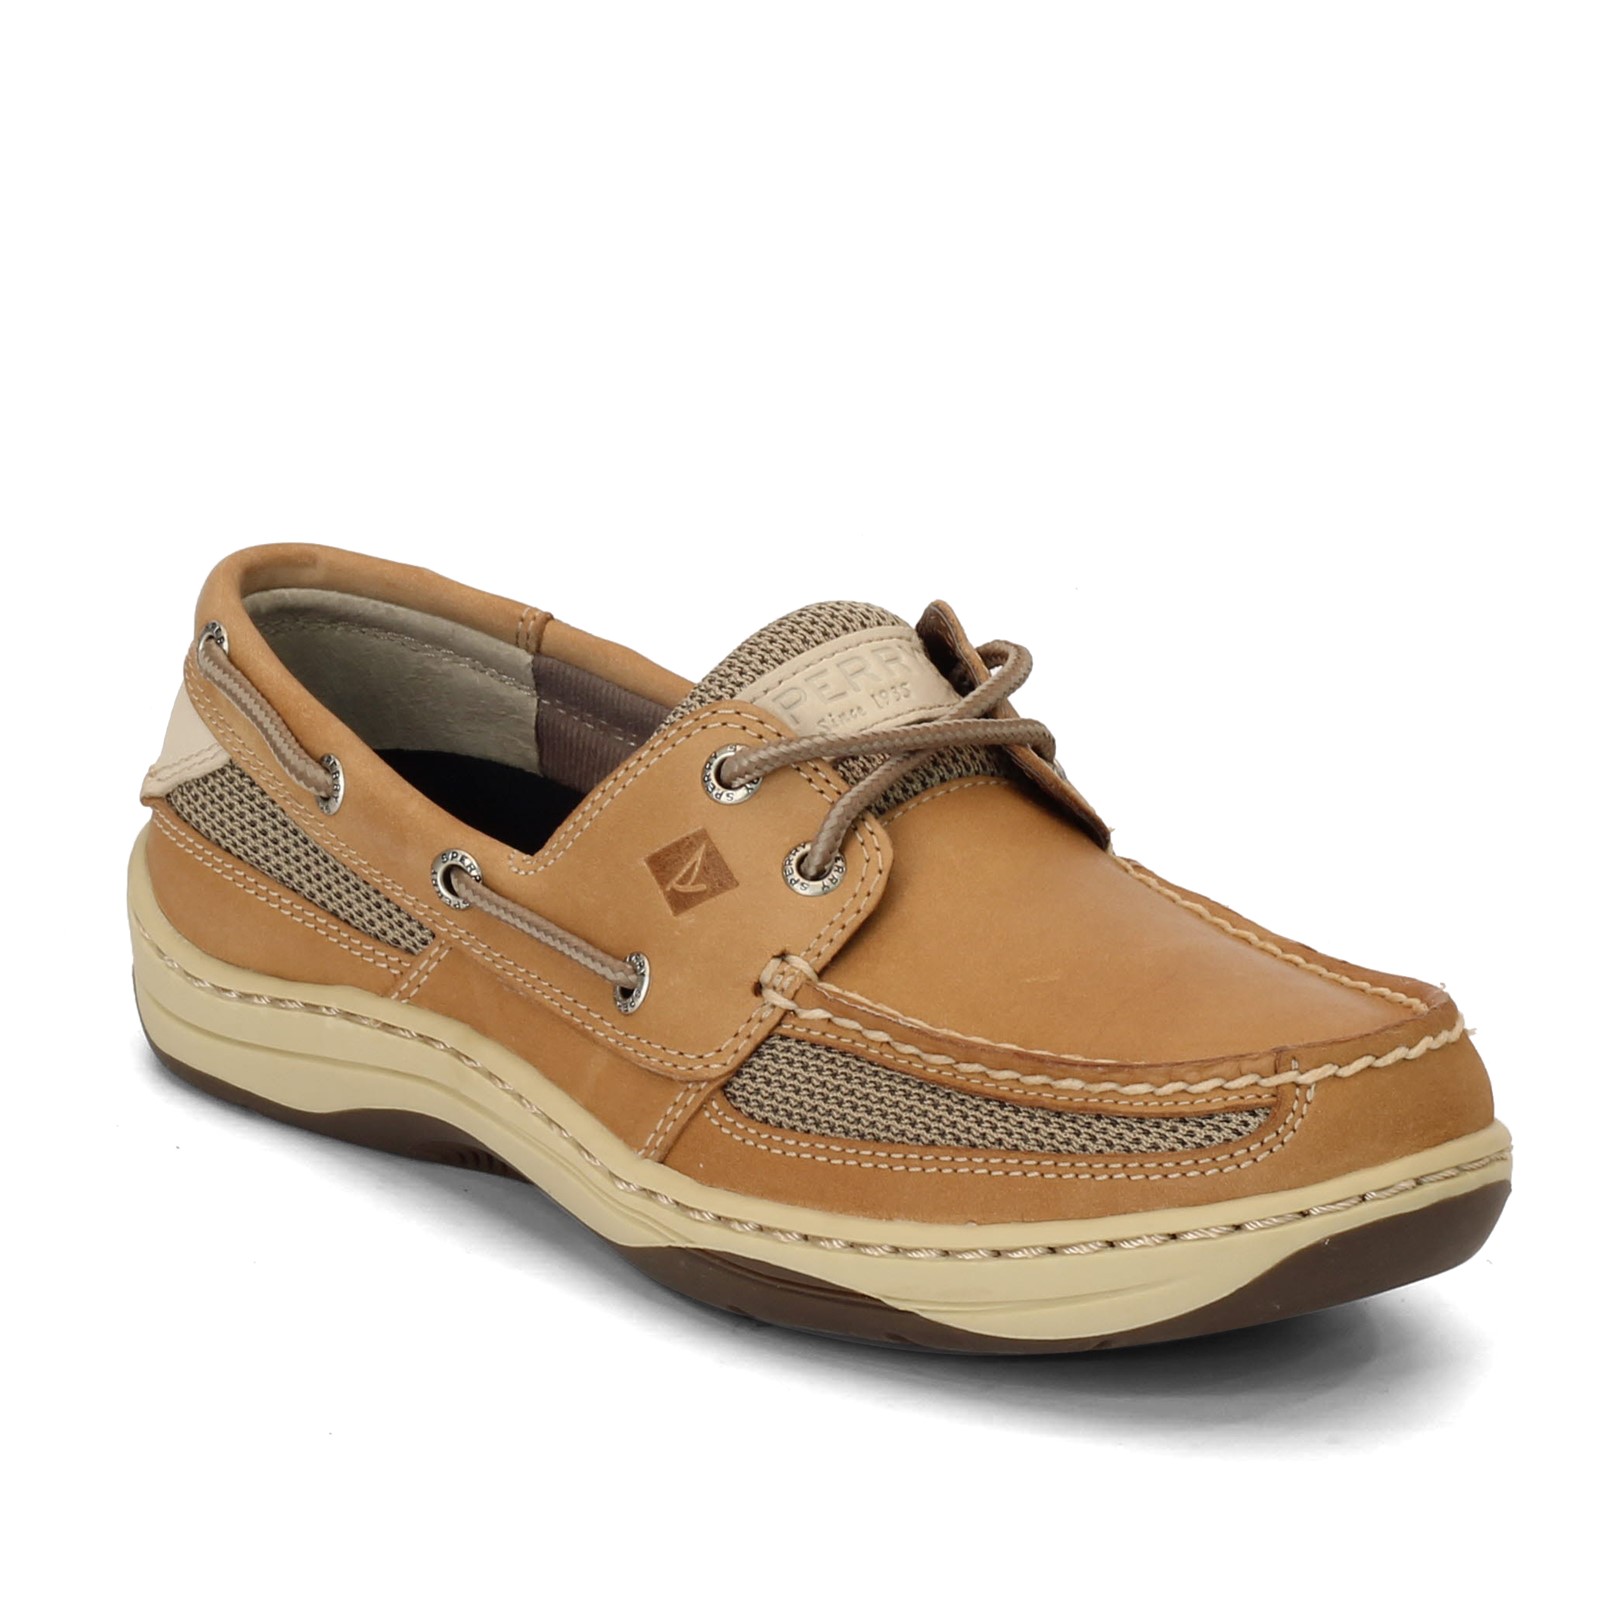 Men's Sperry, Tarpon 2-Eye Boat Shoes - image 1 of 6